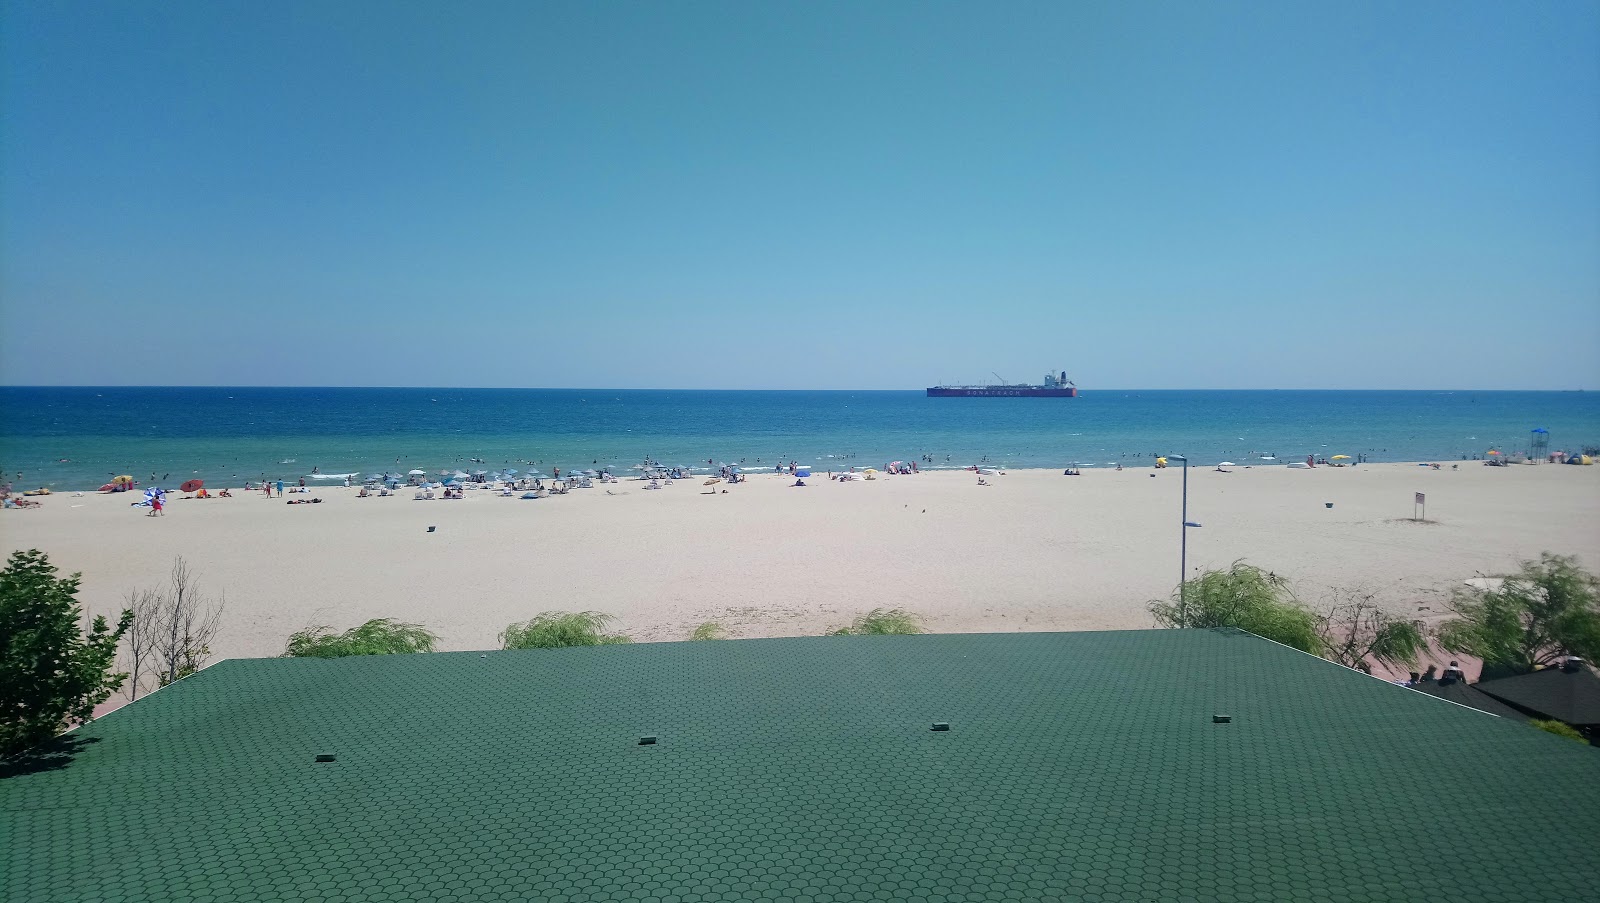 Foto de Sultankoy beach - lugar popular entre os apreciadores de relaxamento